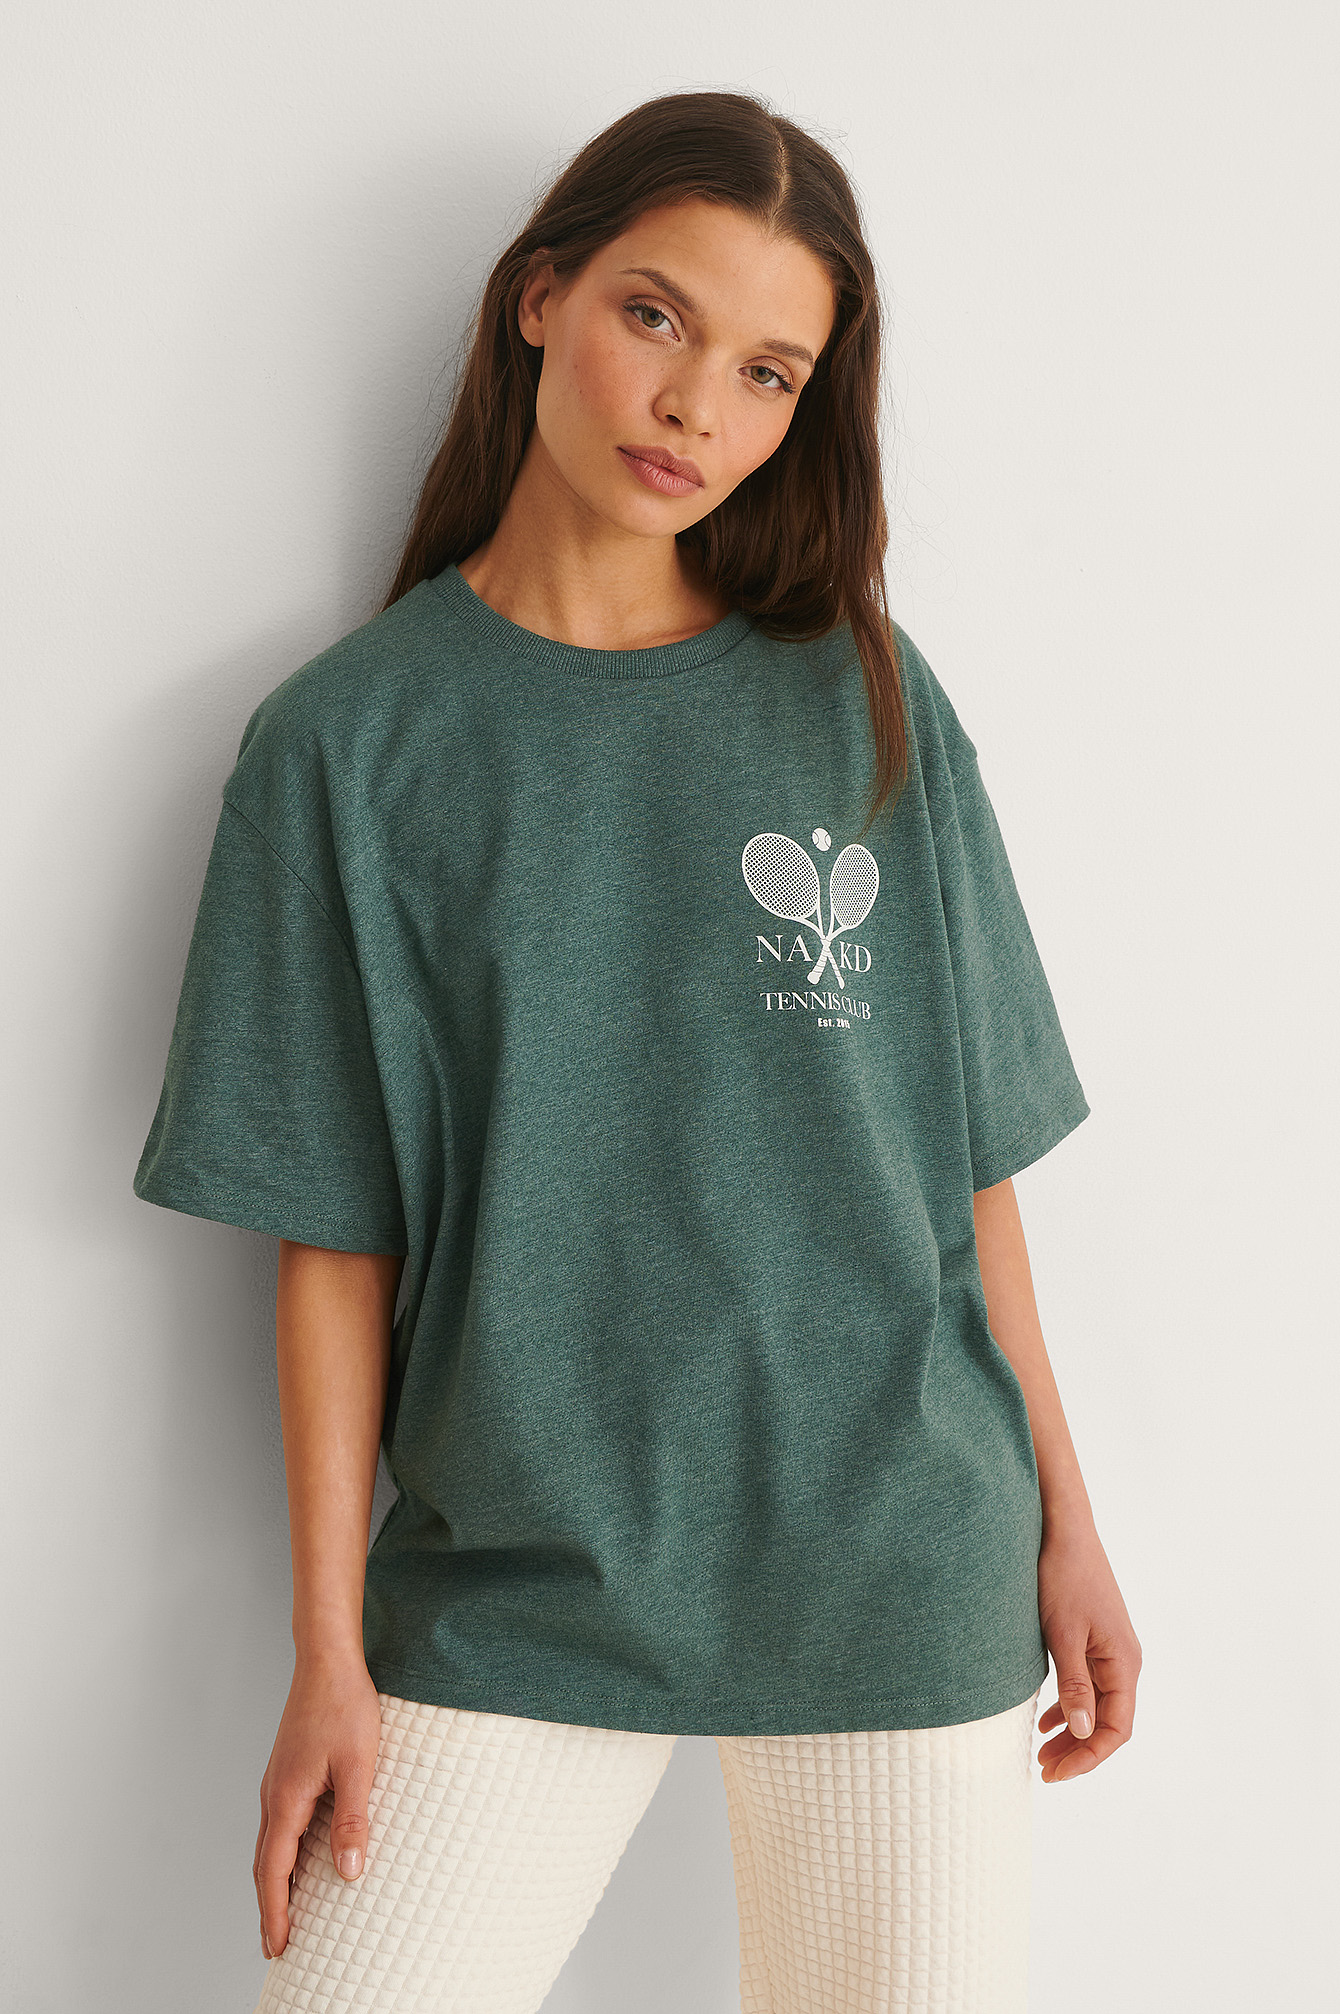 Green Camiseta con estampado Tennis Club orgánica